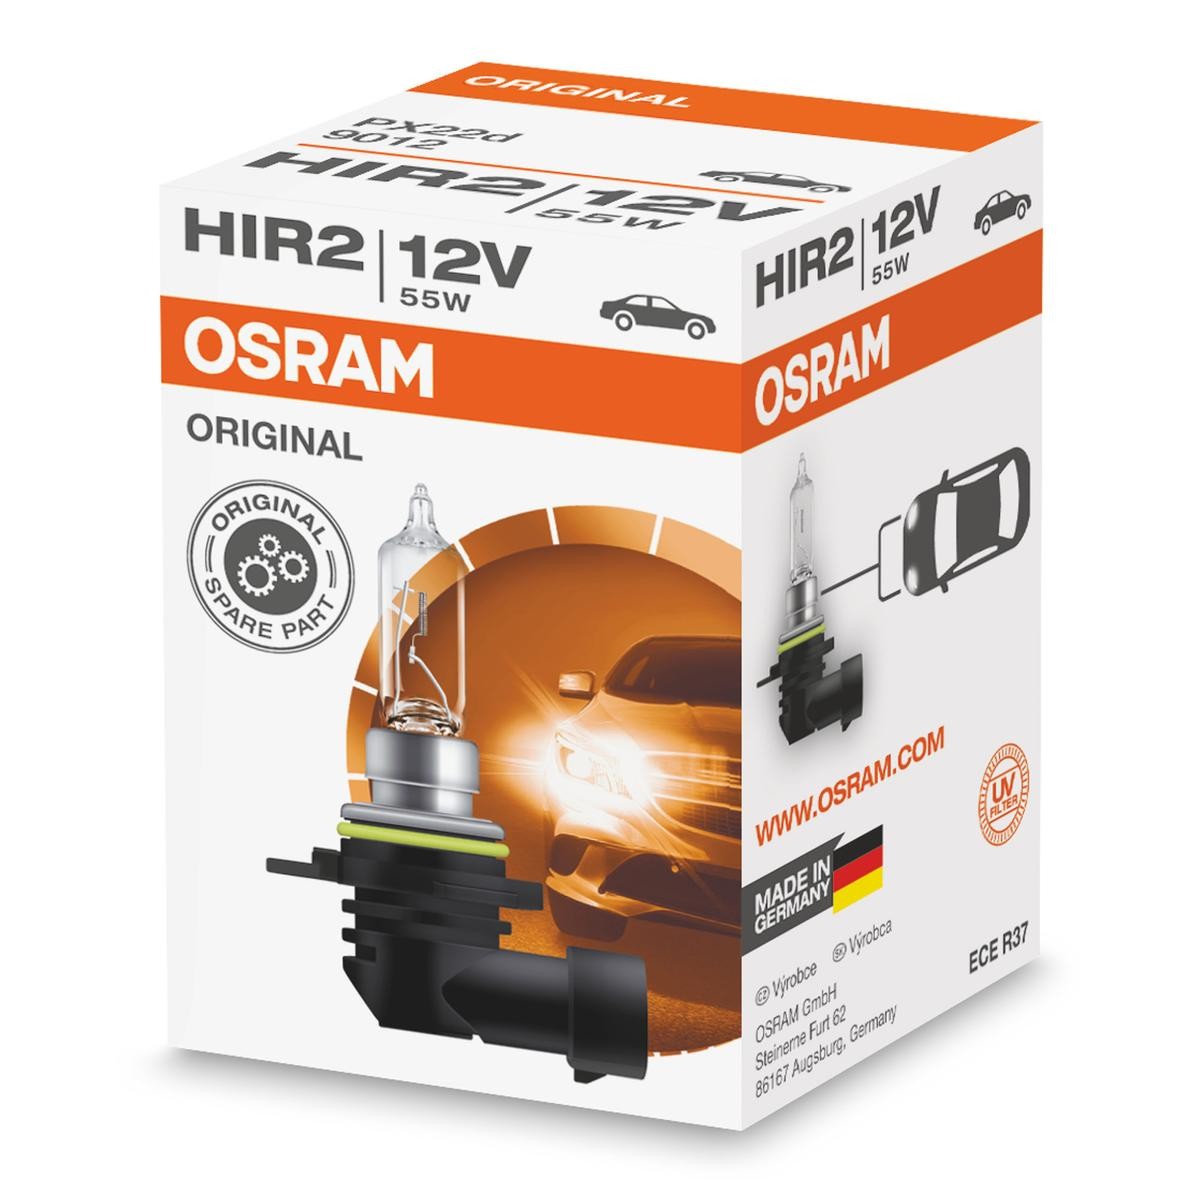 OSRAM 9012 Fernlichtbirne HIR2 12V 55W3200K Halogen ORIGINAL